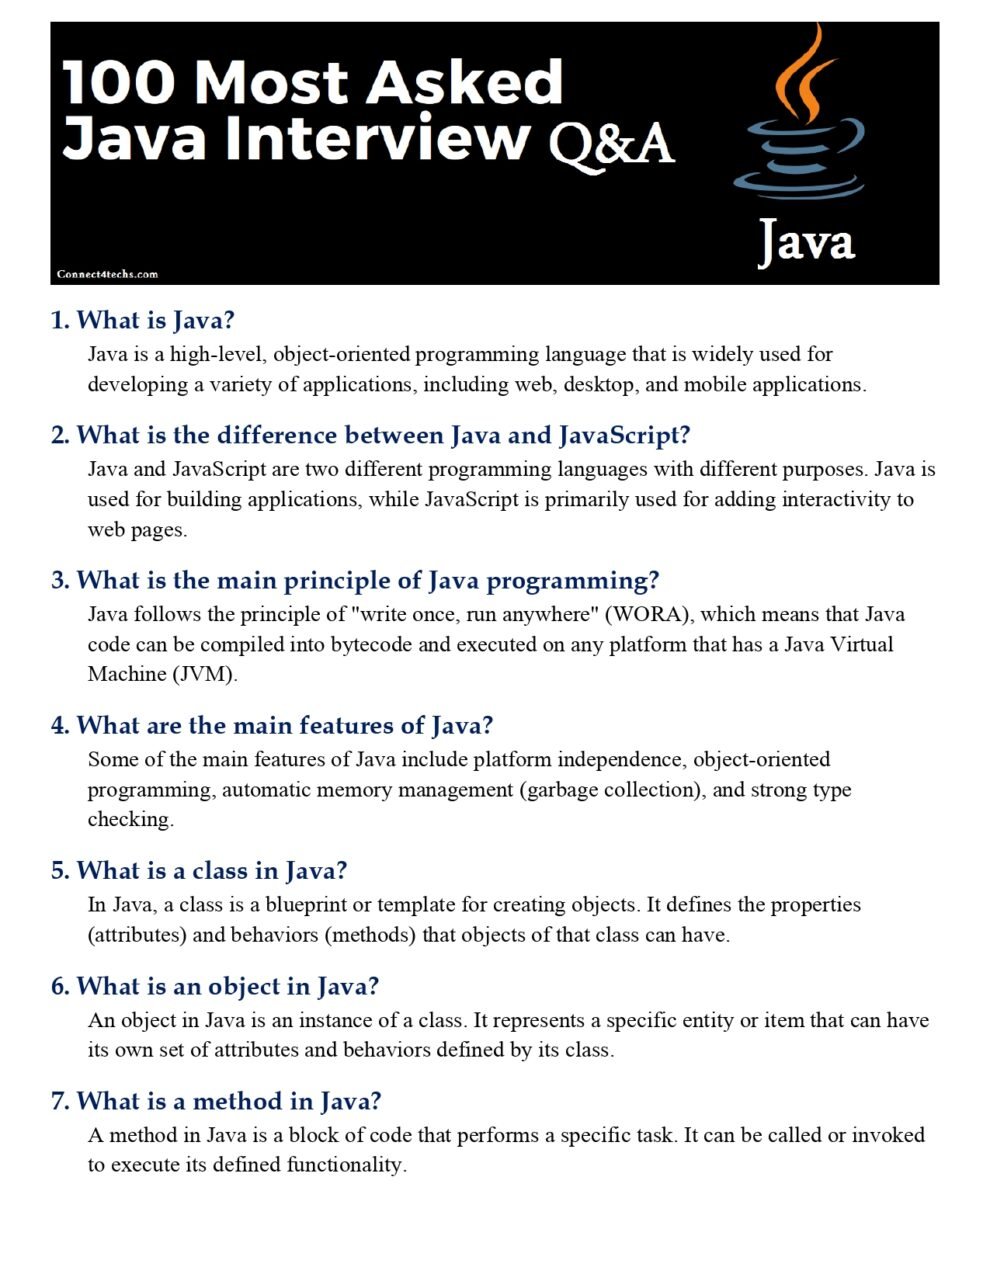 Most Asked Java Interview (100 Q&A) PDF